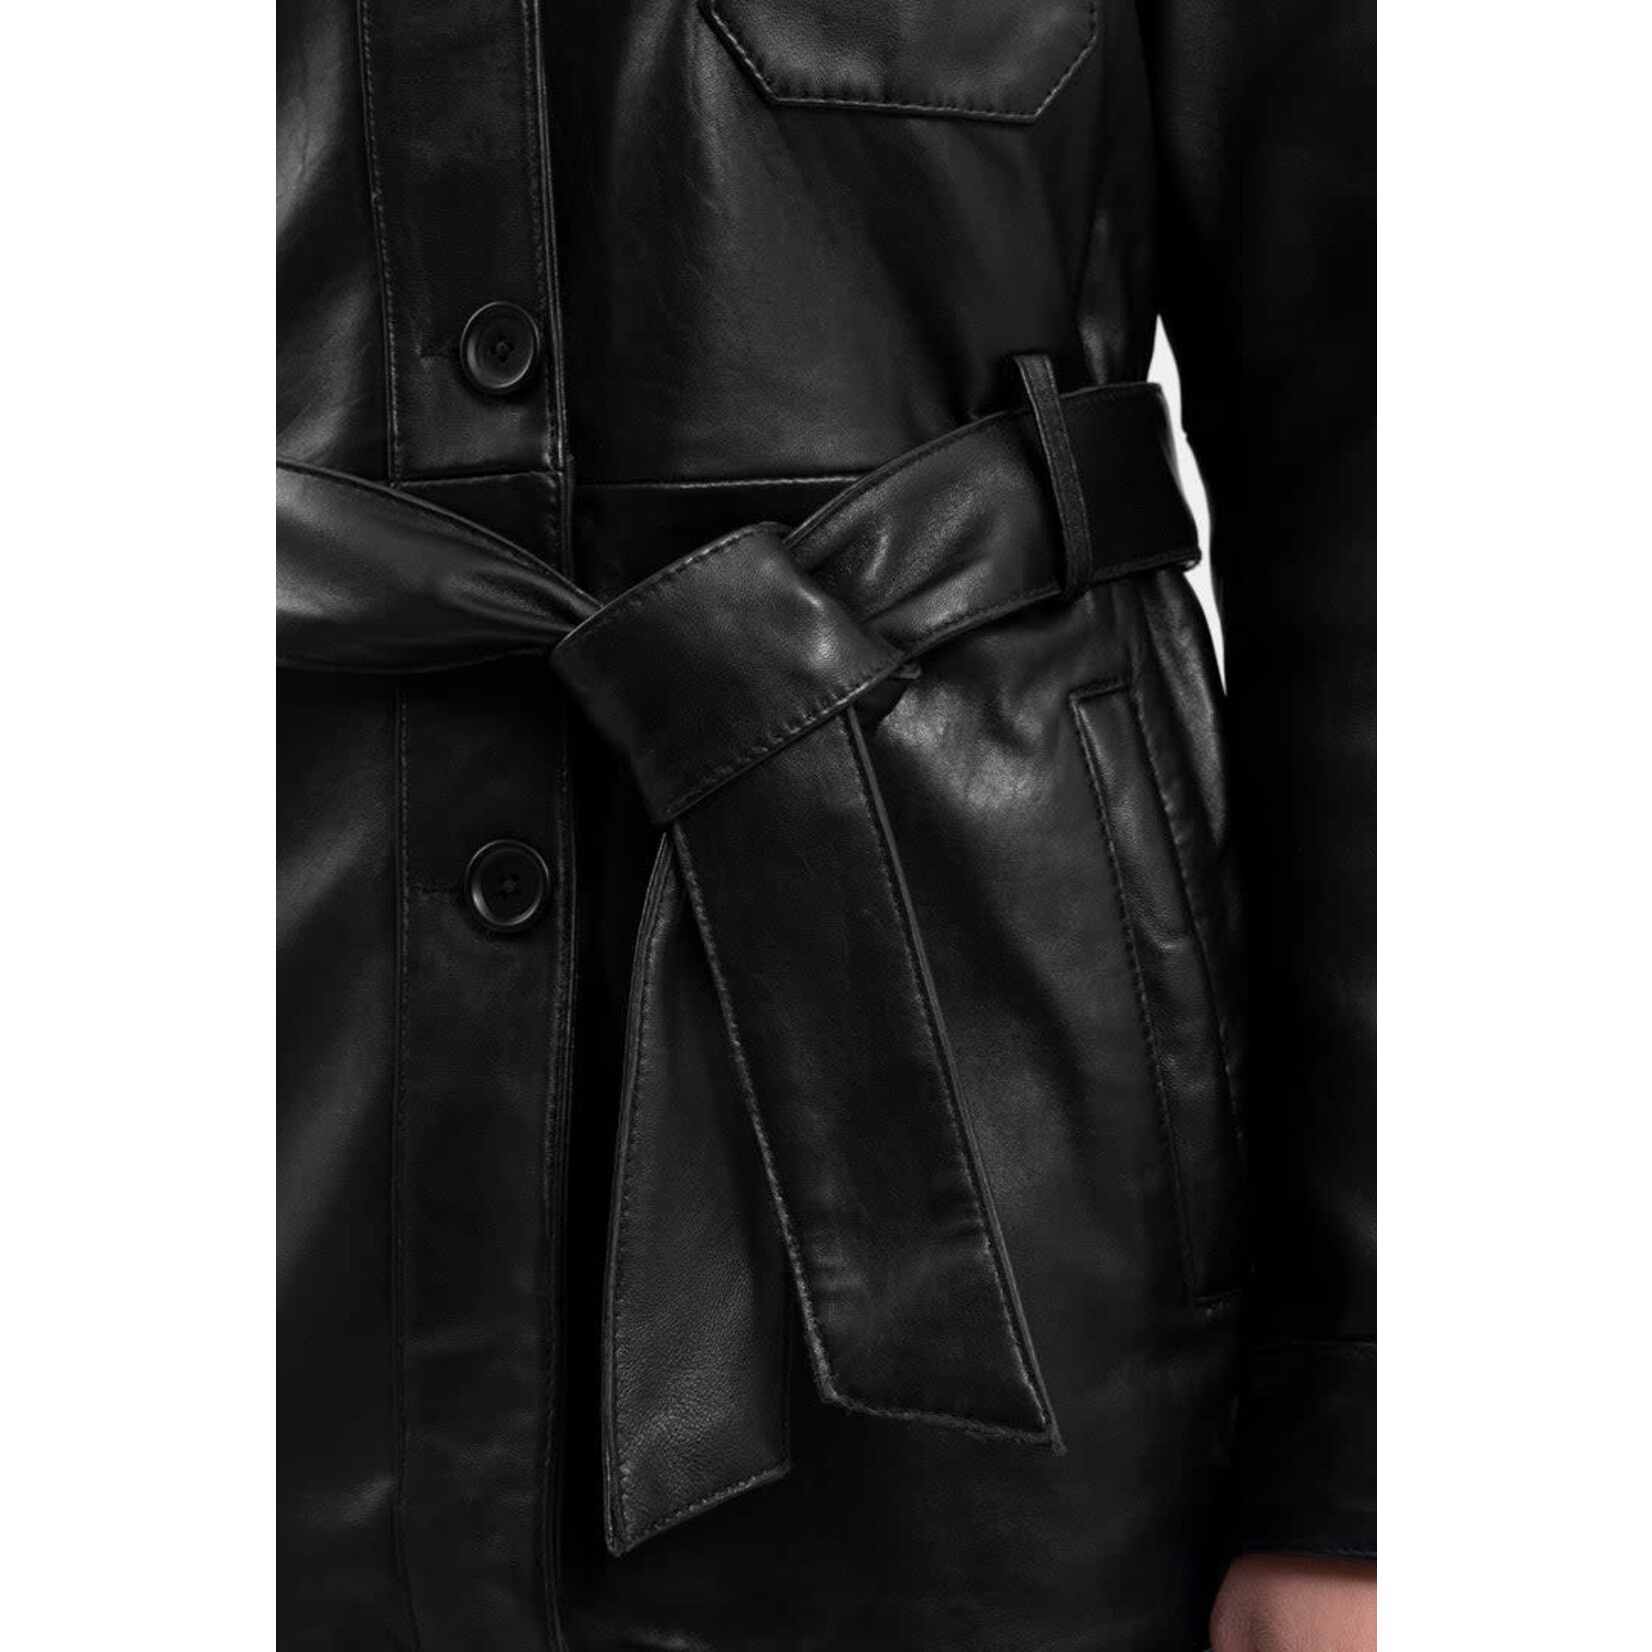 Whet Blu Janely Womens Black Leather Belted Jacket